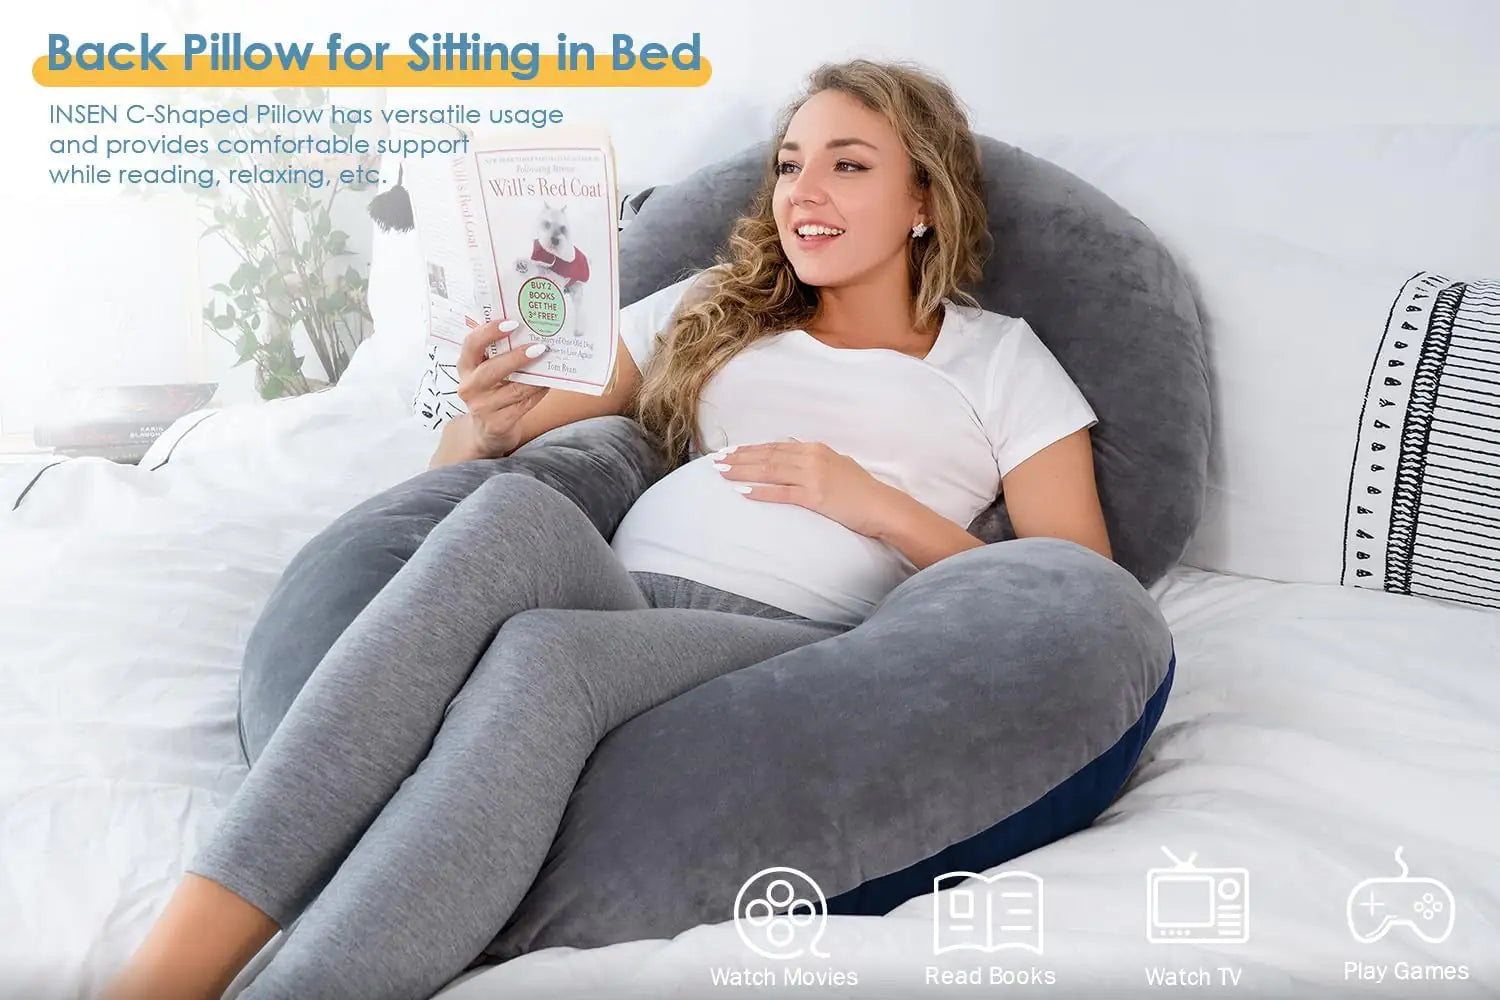 C-Shaped Body Pregnancy Pillow - RIT VITAL DEMO STORE